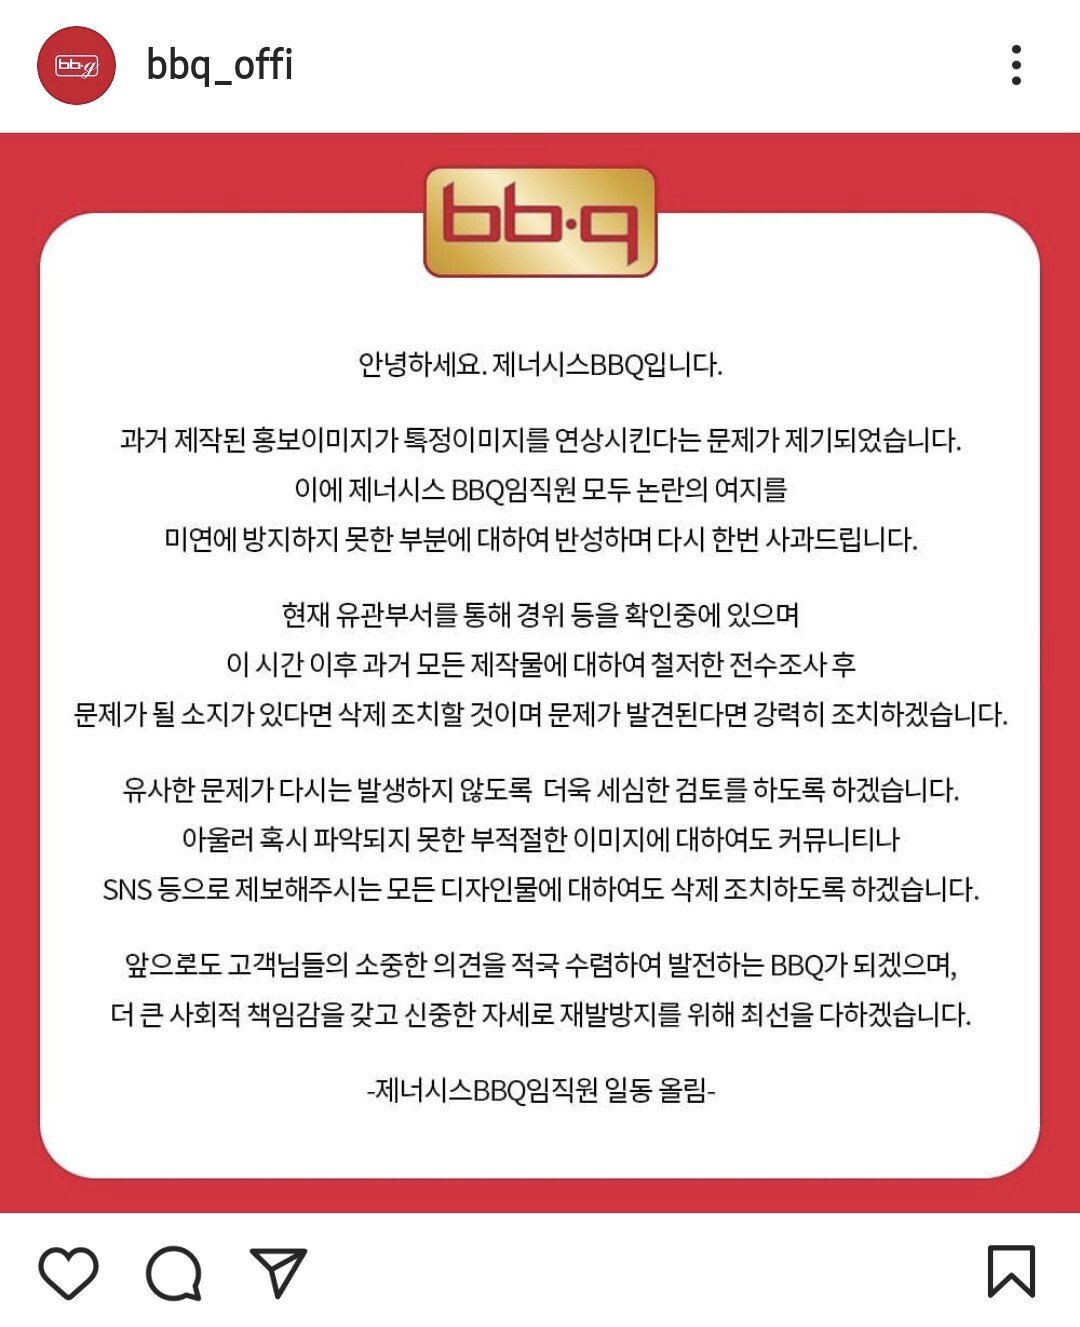 BBQ 공식 사과문.jpg